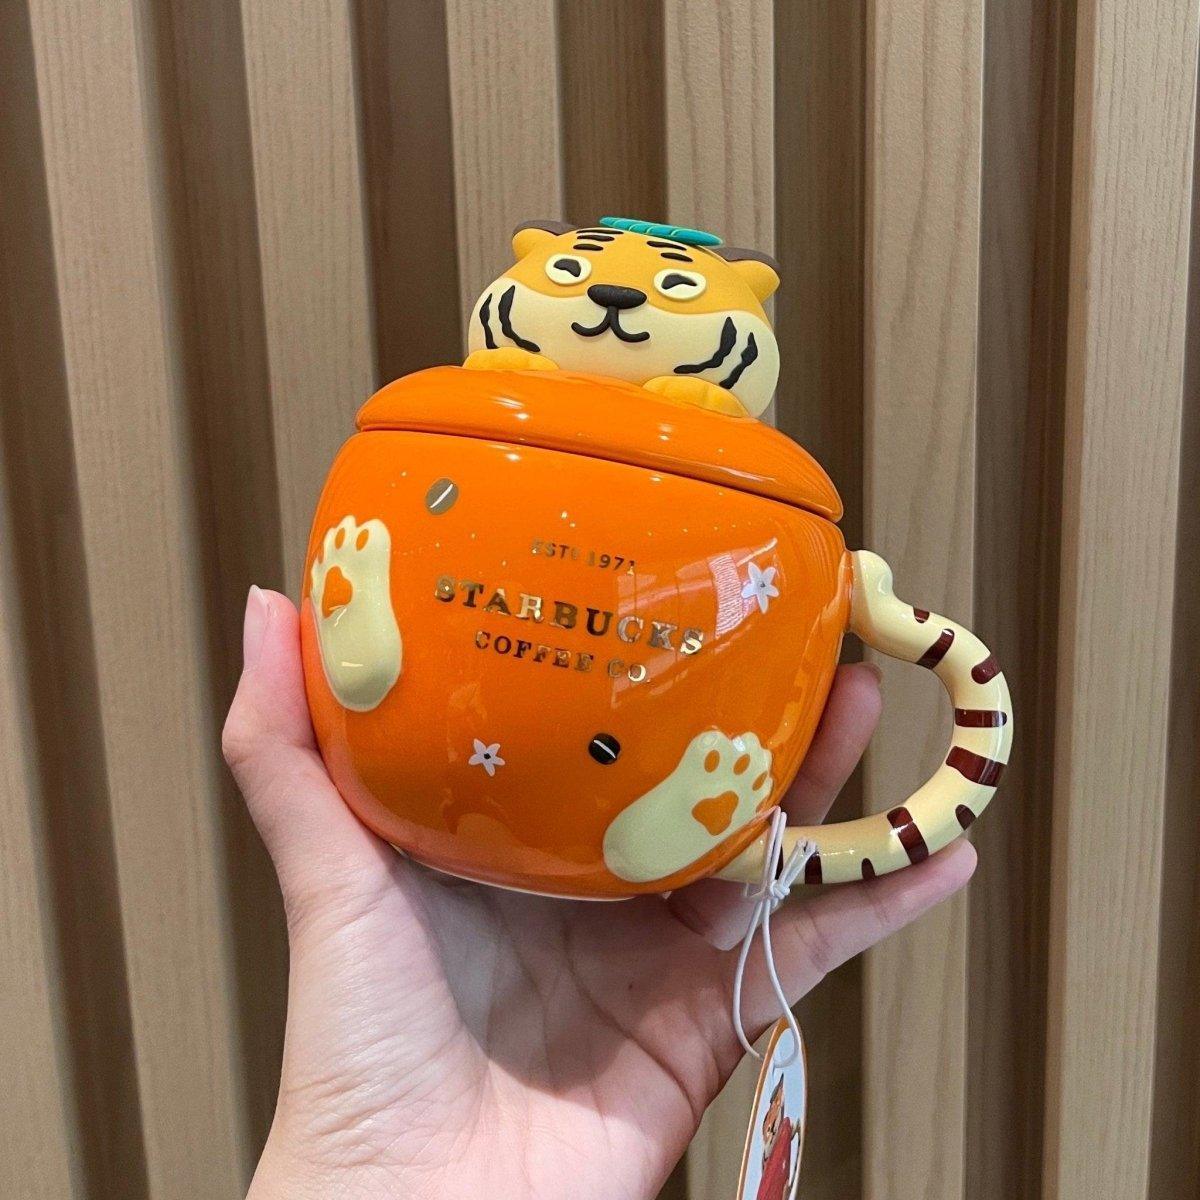 Orange Tiger Ceramic Mug 300ml / 10,14oz - Ann Ann Starbucks